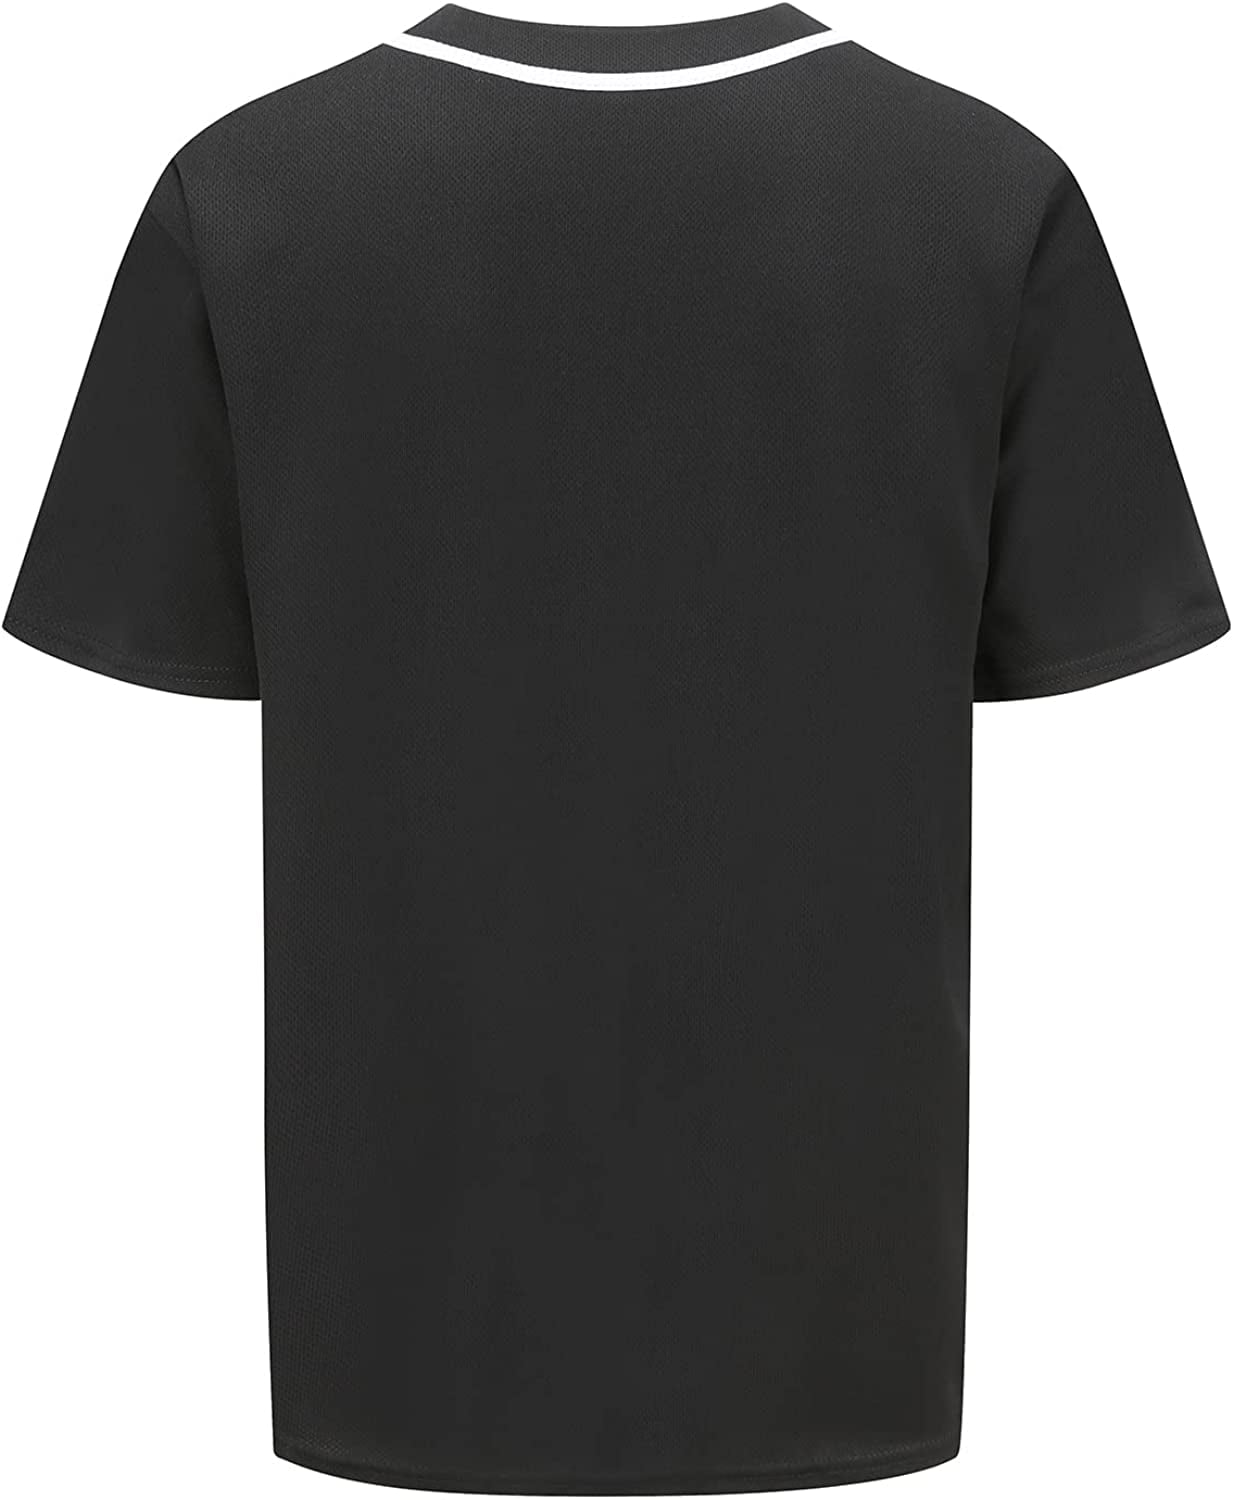 Buy NJKA Blank Plain Hip Hop Hipster Button Down Baseball Jersey, Short  Sleeve Active T Shirts (Black, Small) at